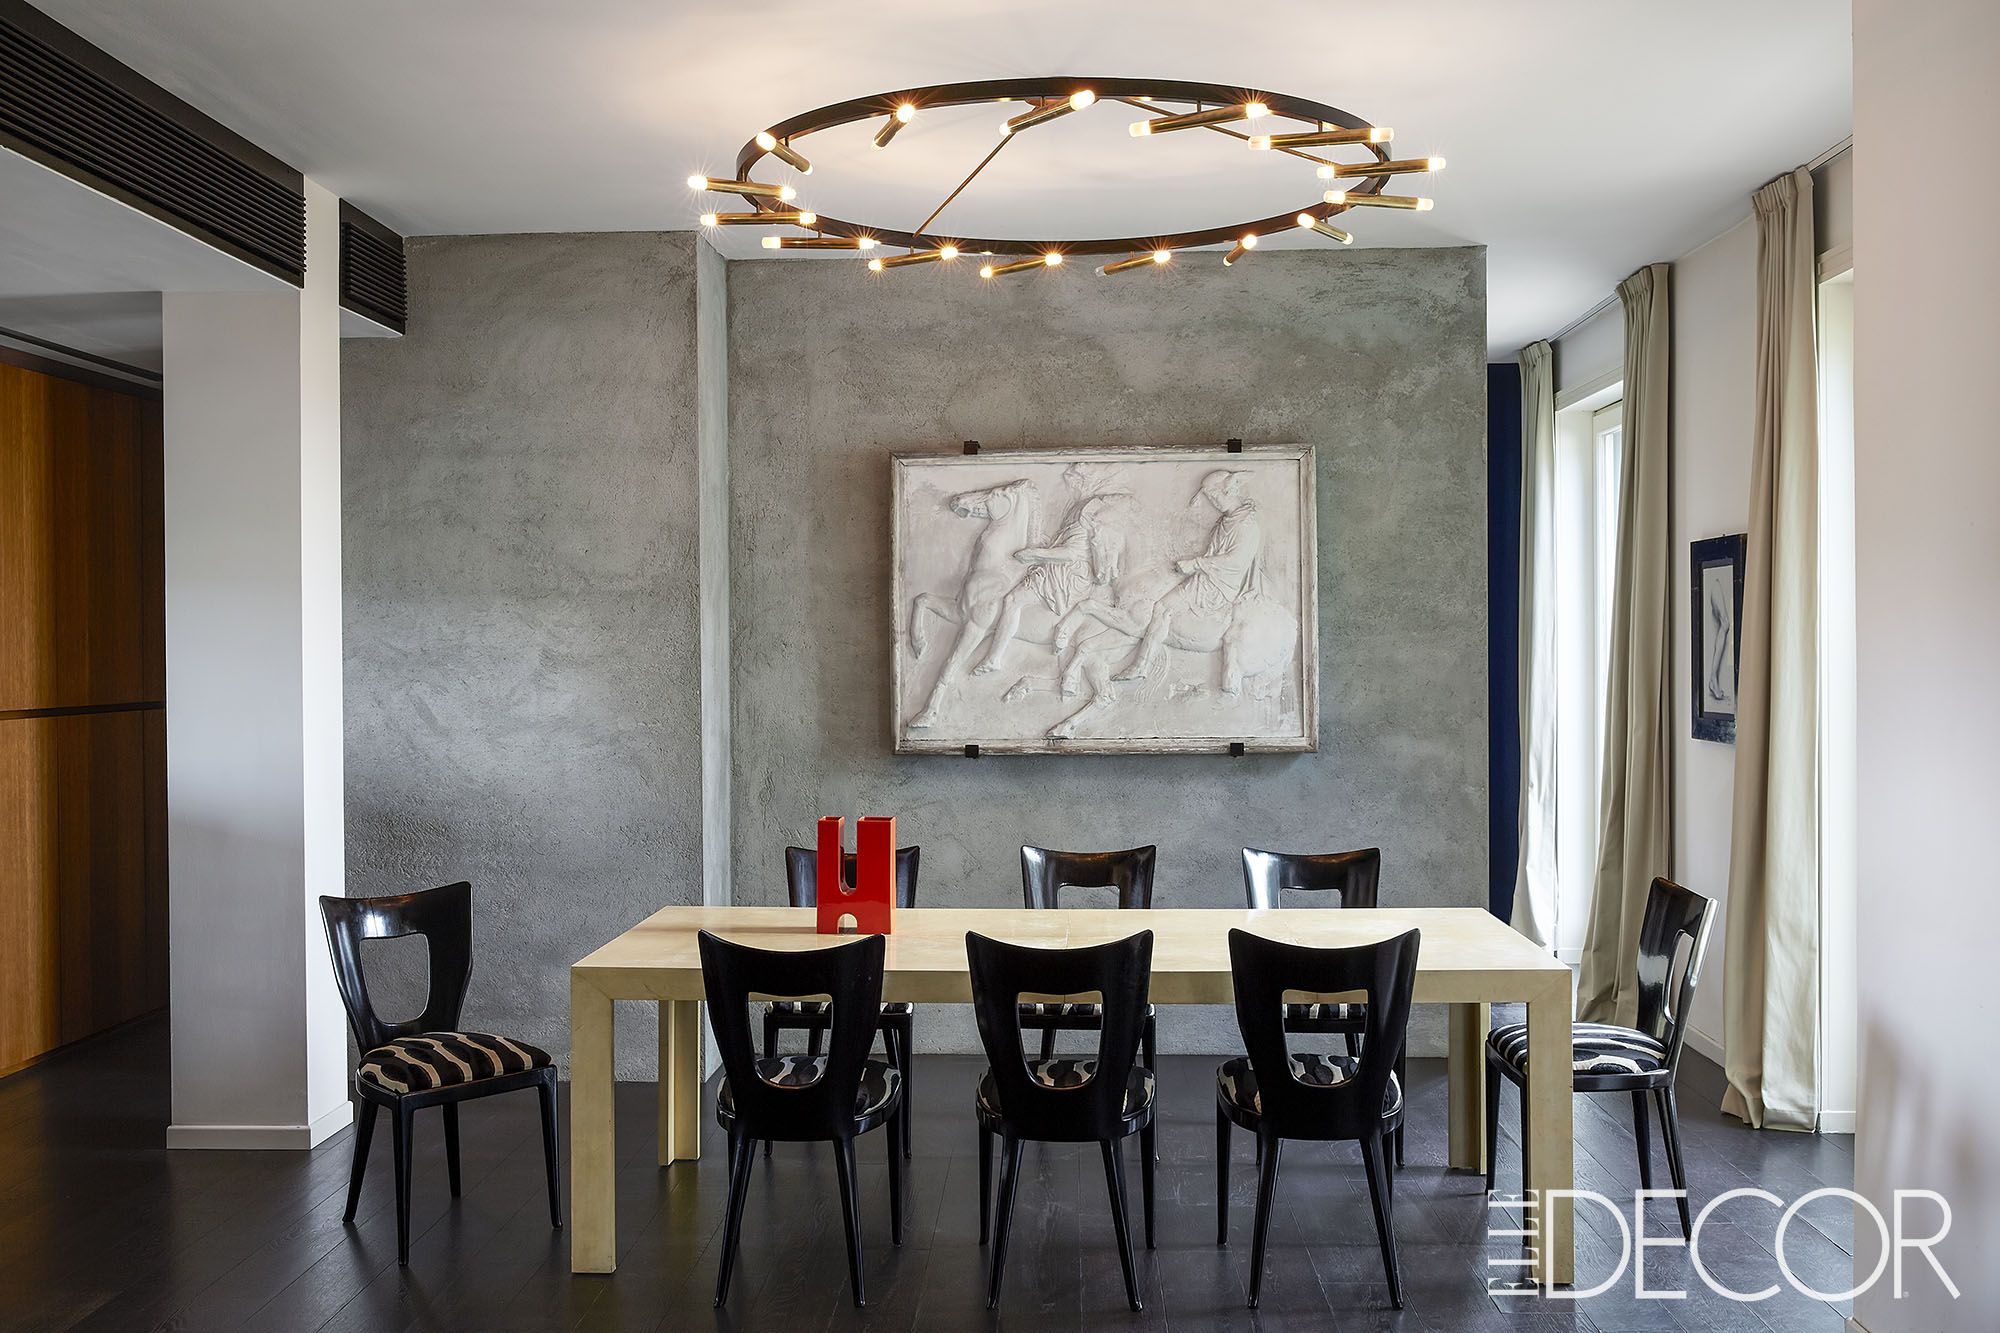 30 Best Dining Room Light Fixtures, Dining Room Overhead Light Fixture